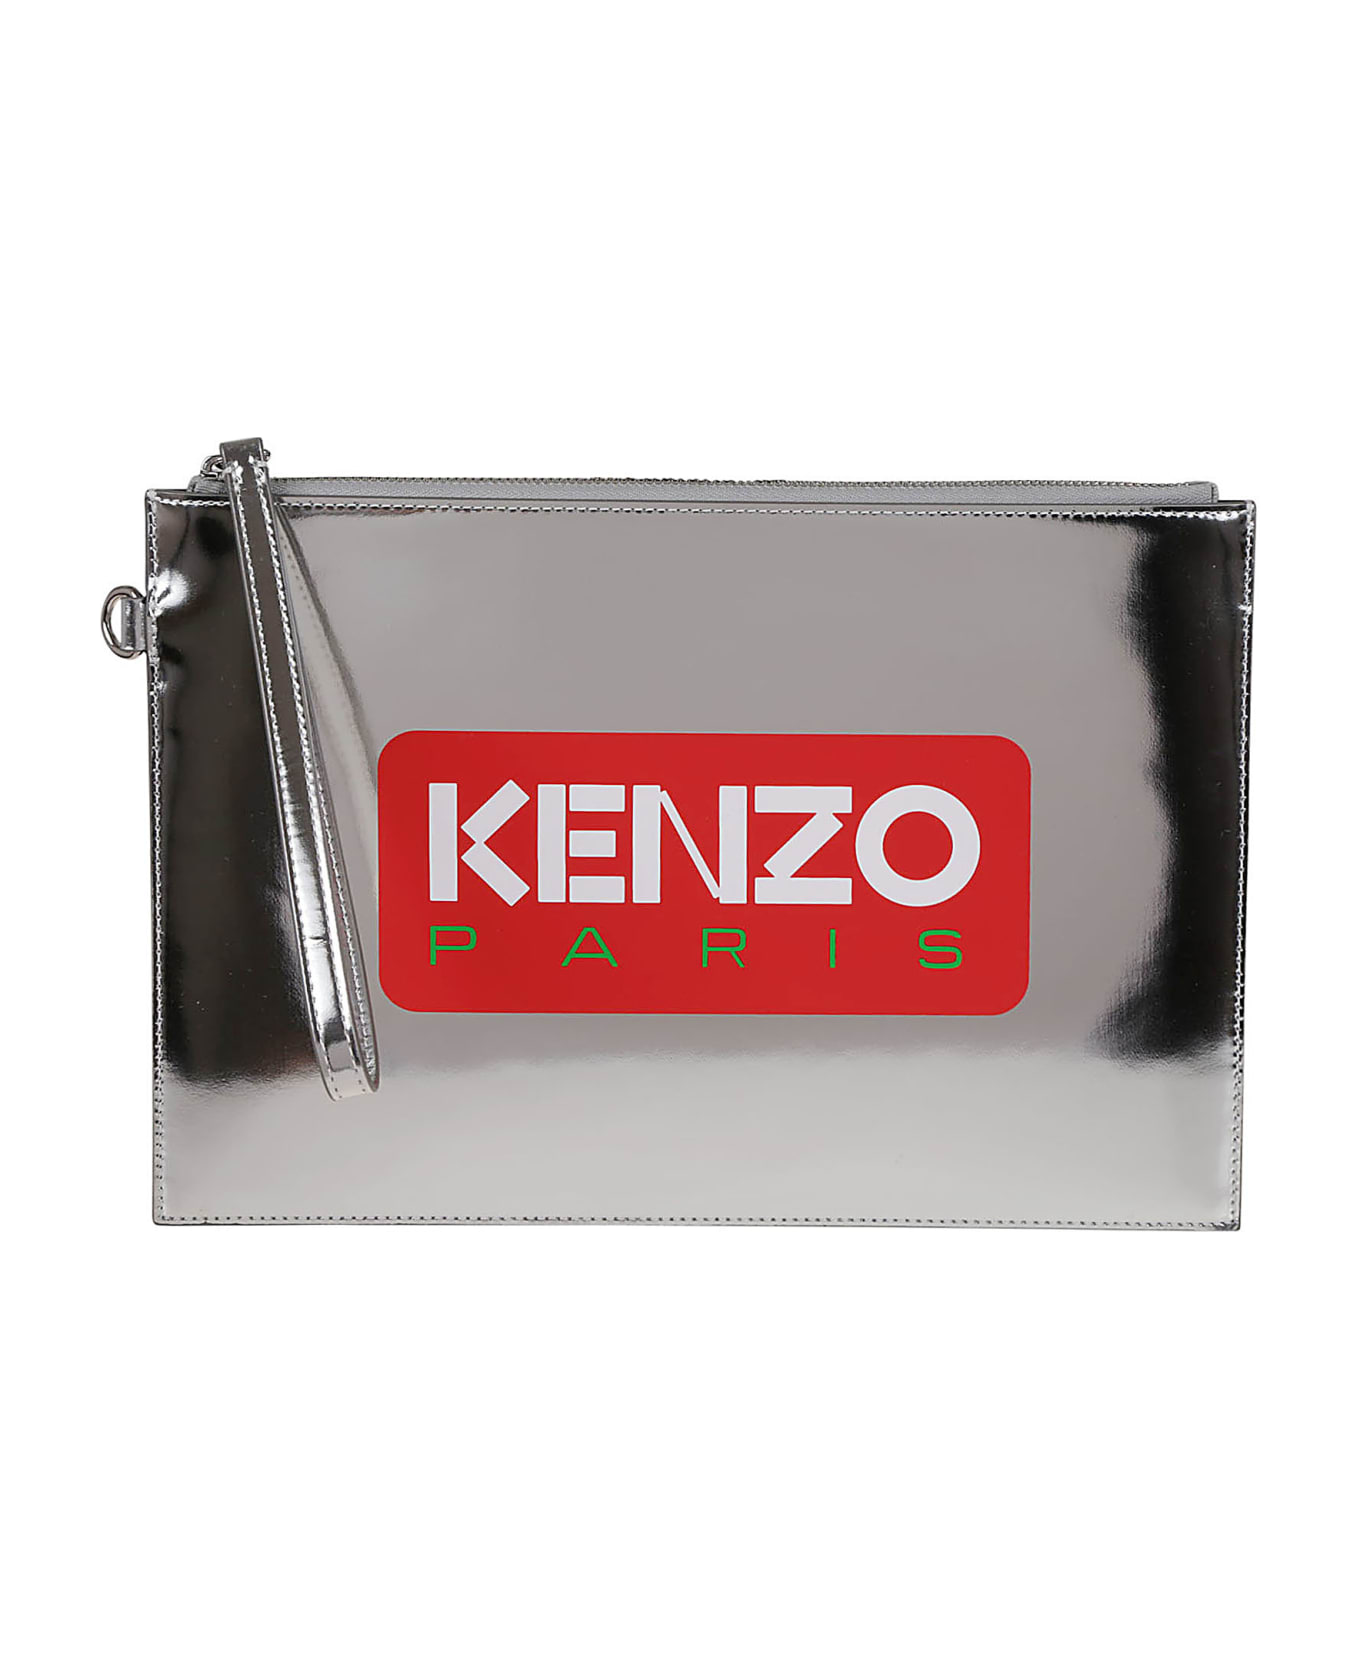 Kenzo Large Logo Printed Clutch Bag - Ag Argent